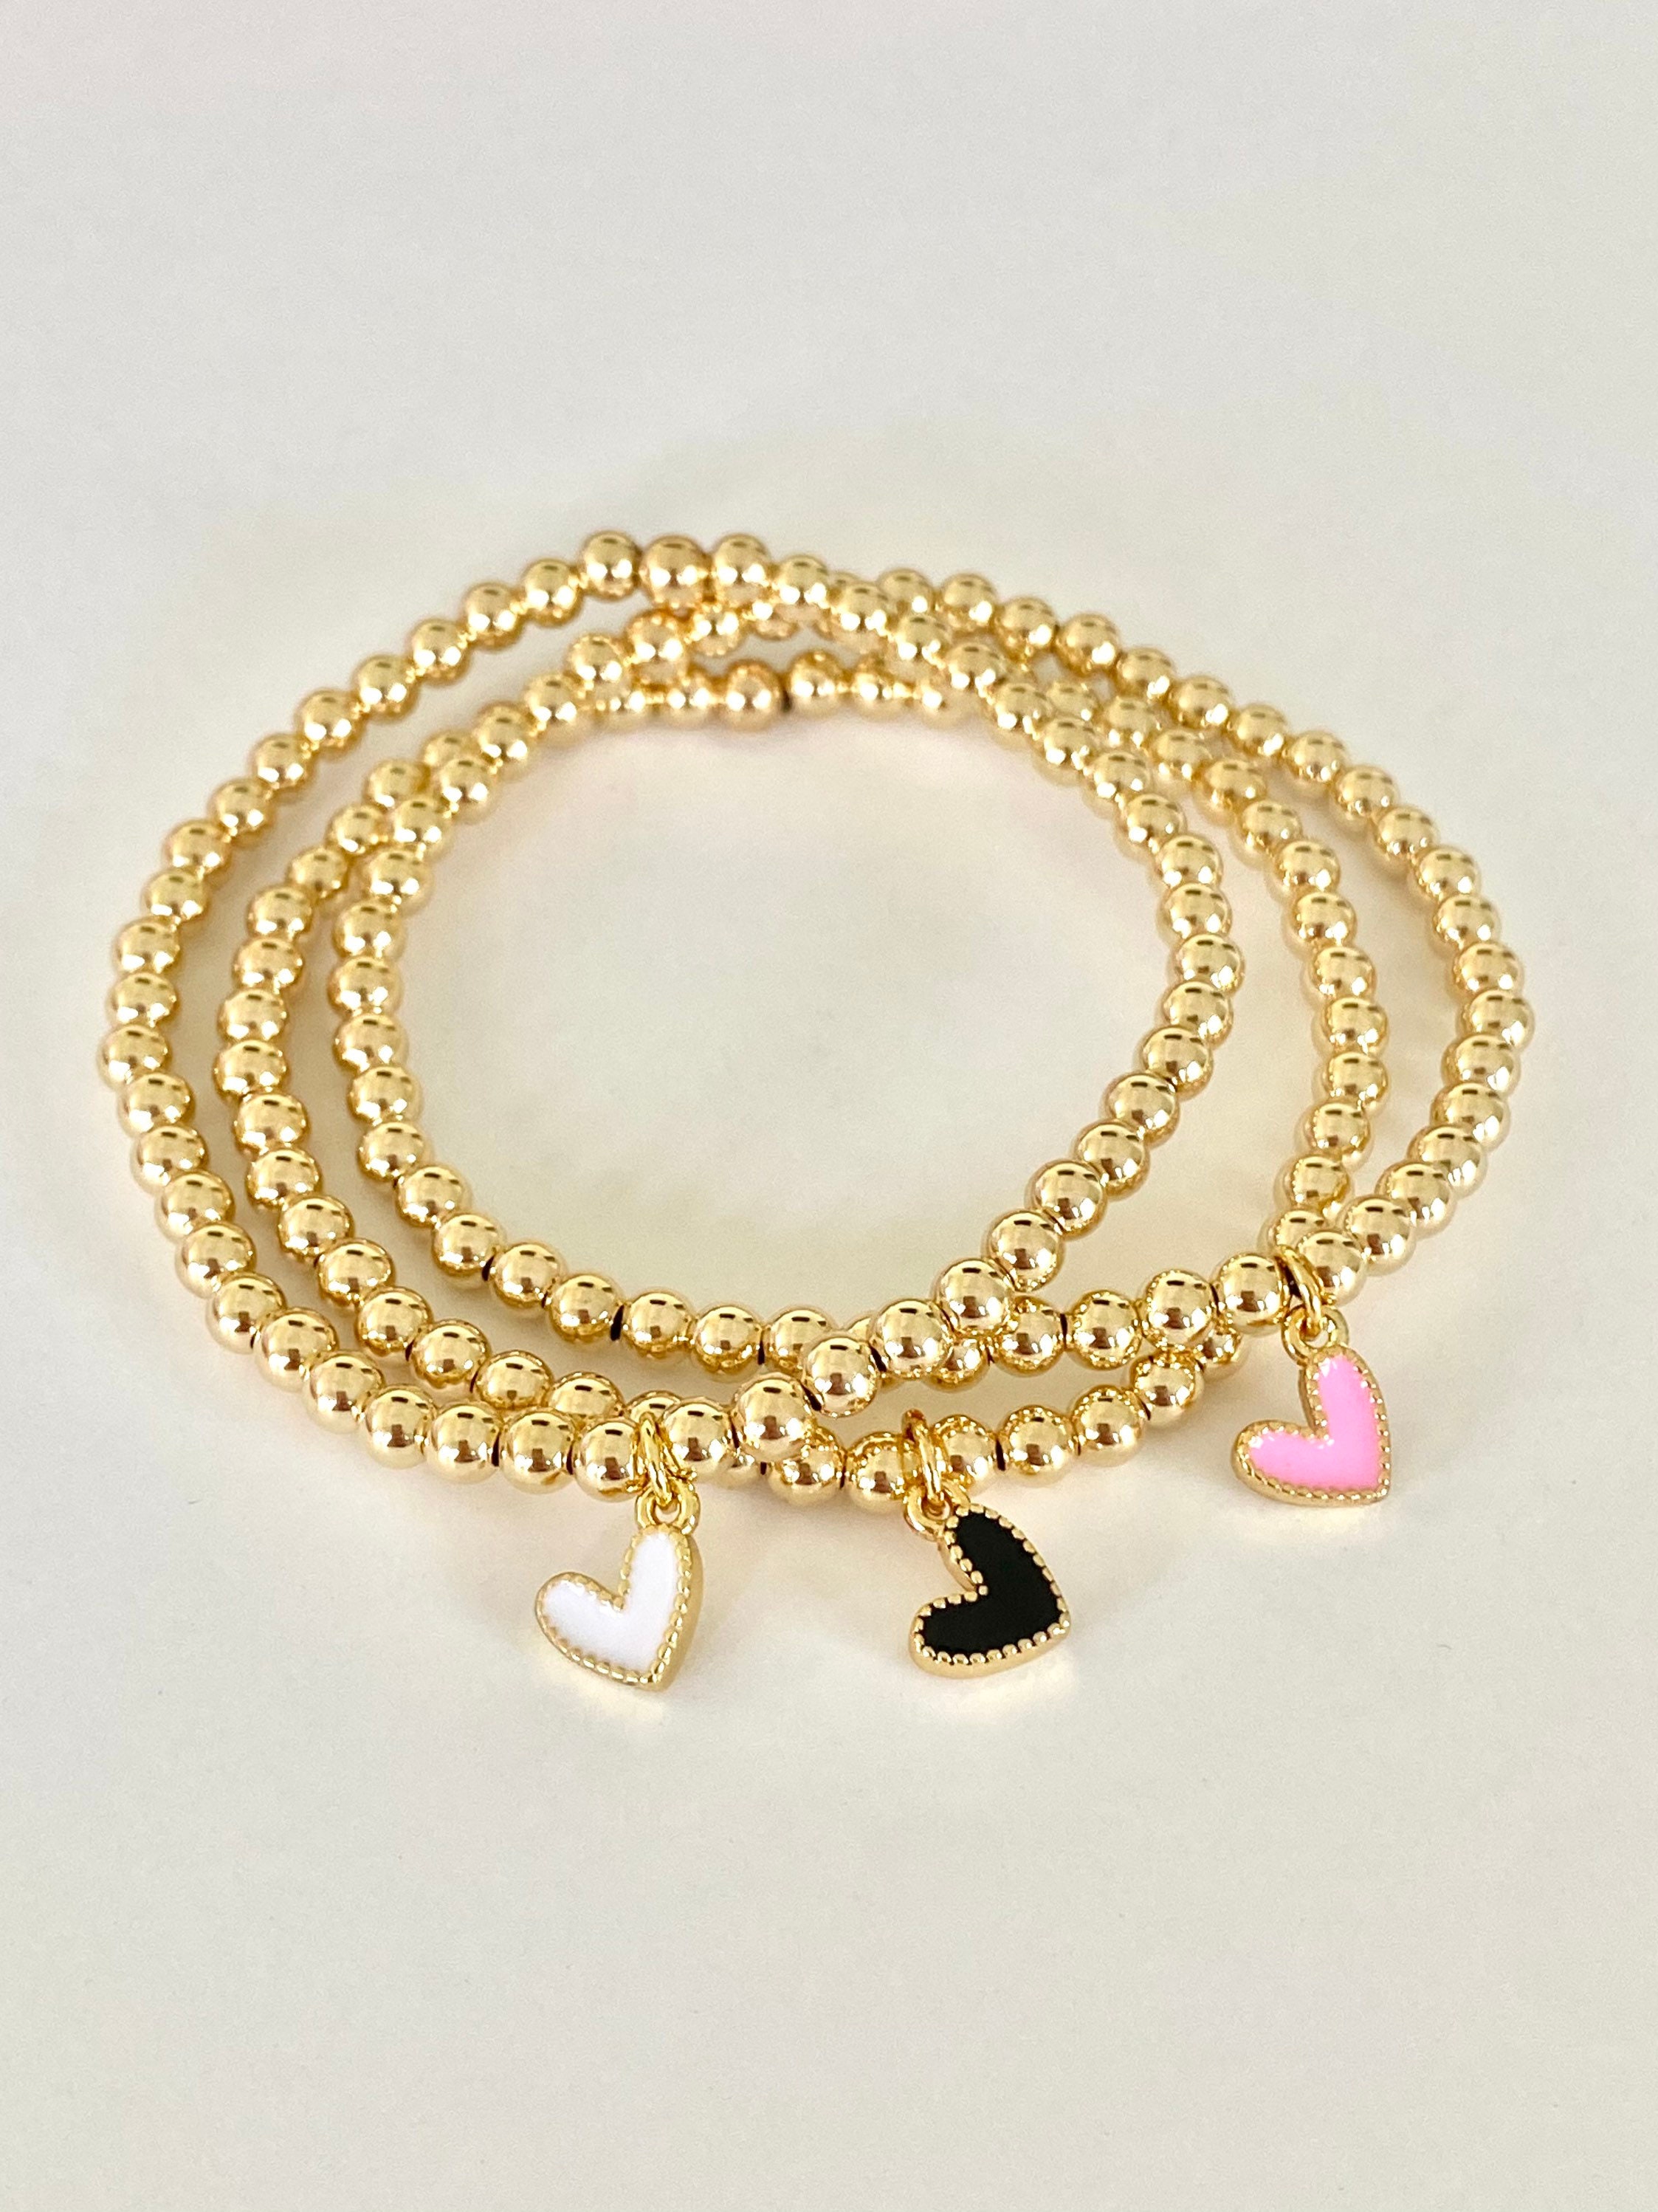 Gold Bracelet With White/gold Letter Beads 